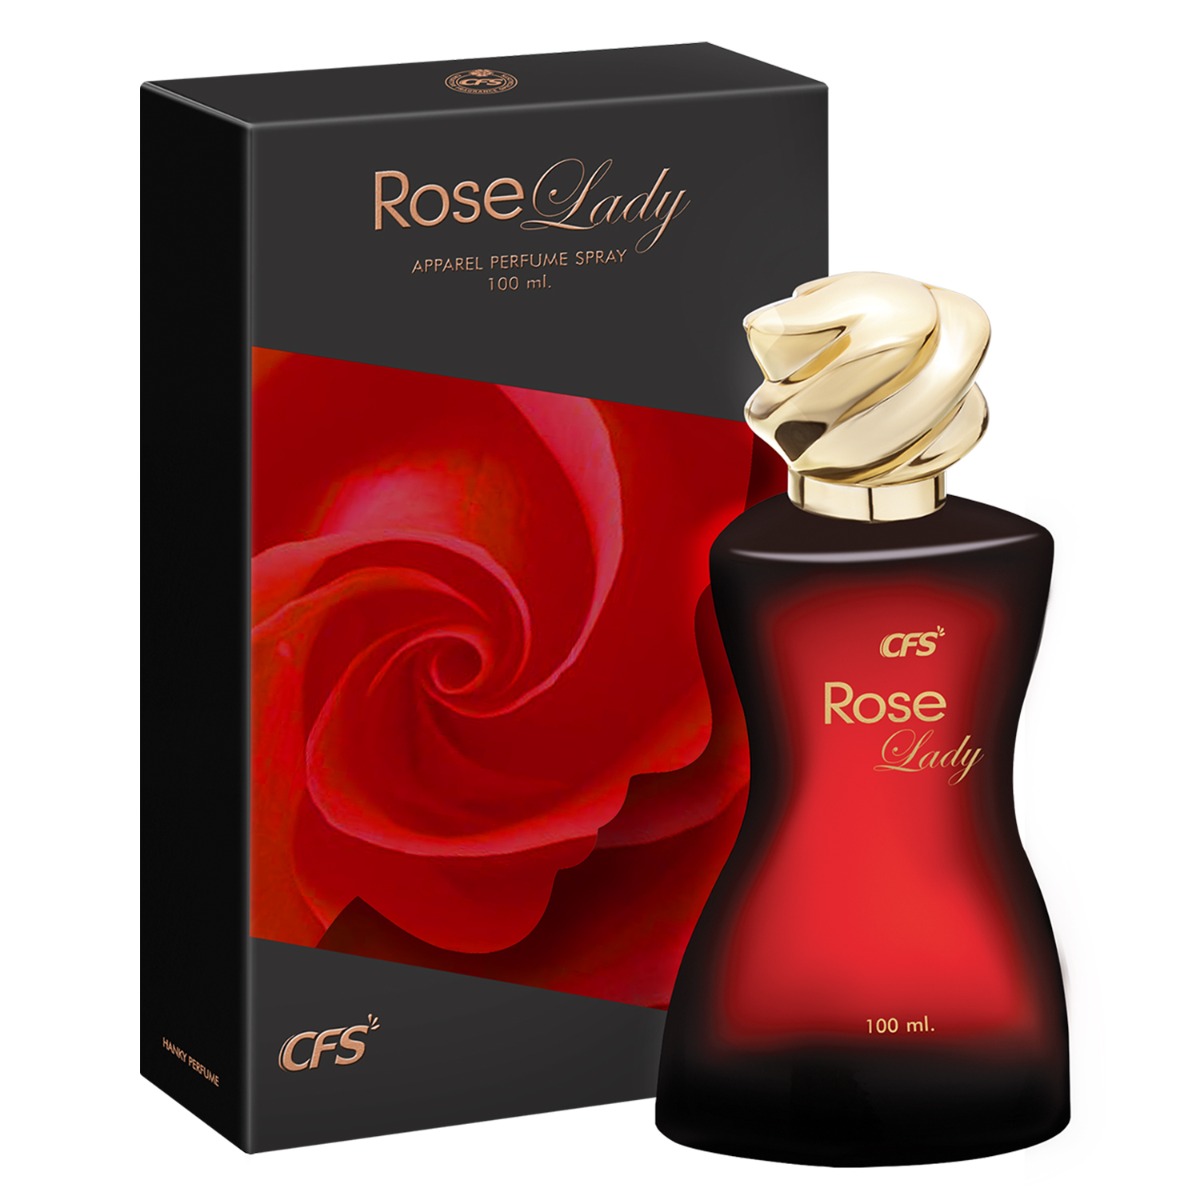 CFS Rose Lady Long Lasting Apparel Perfume Spray, 100ml